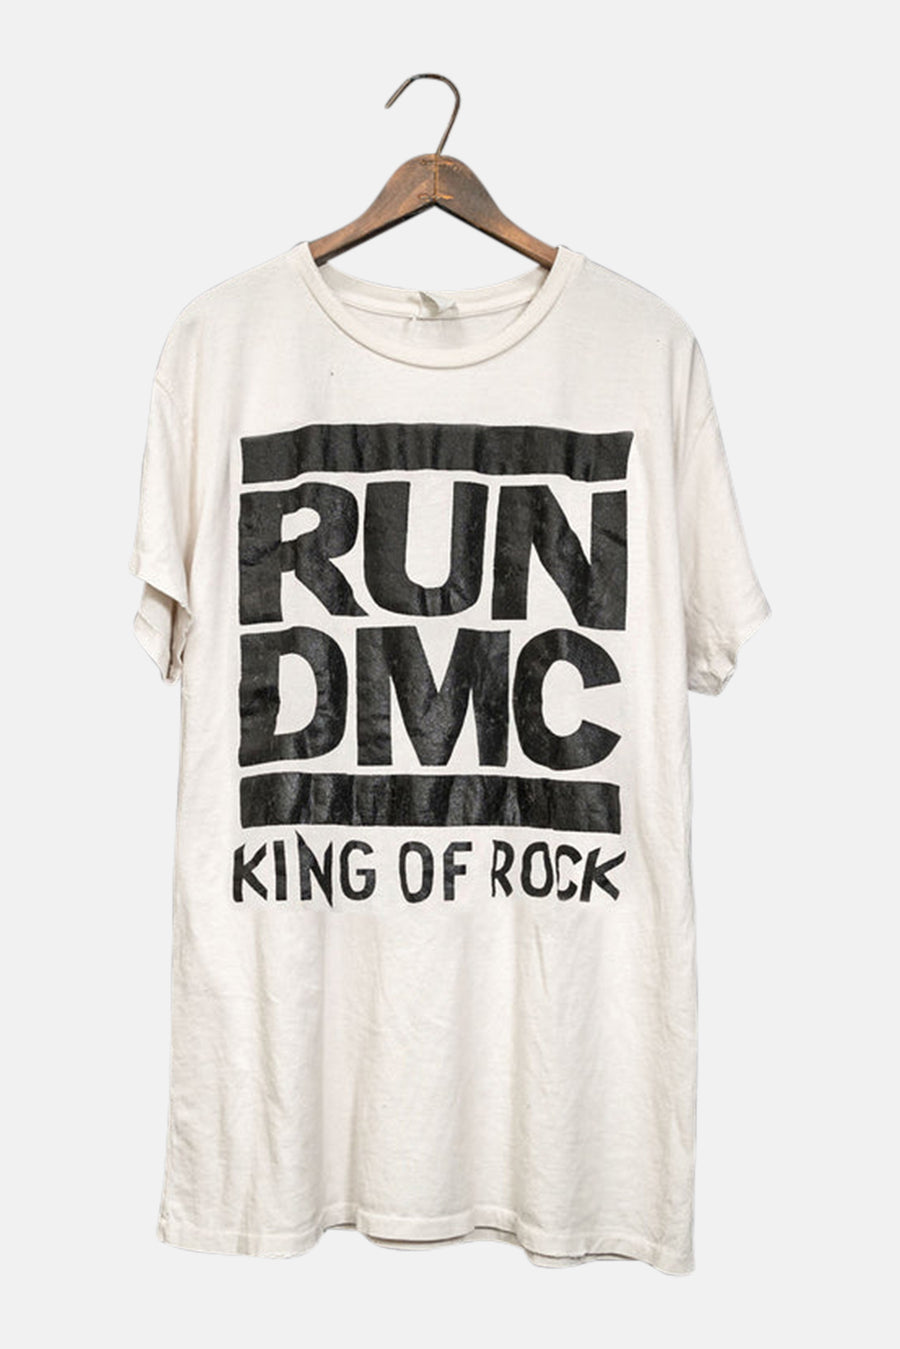 Run DMC King Of Rock Oversized Tee Vintage White